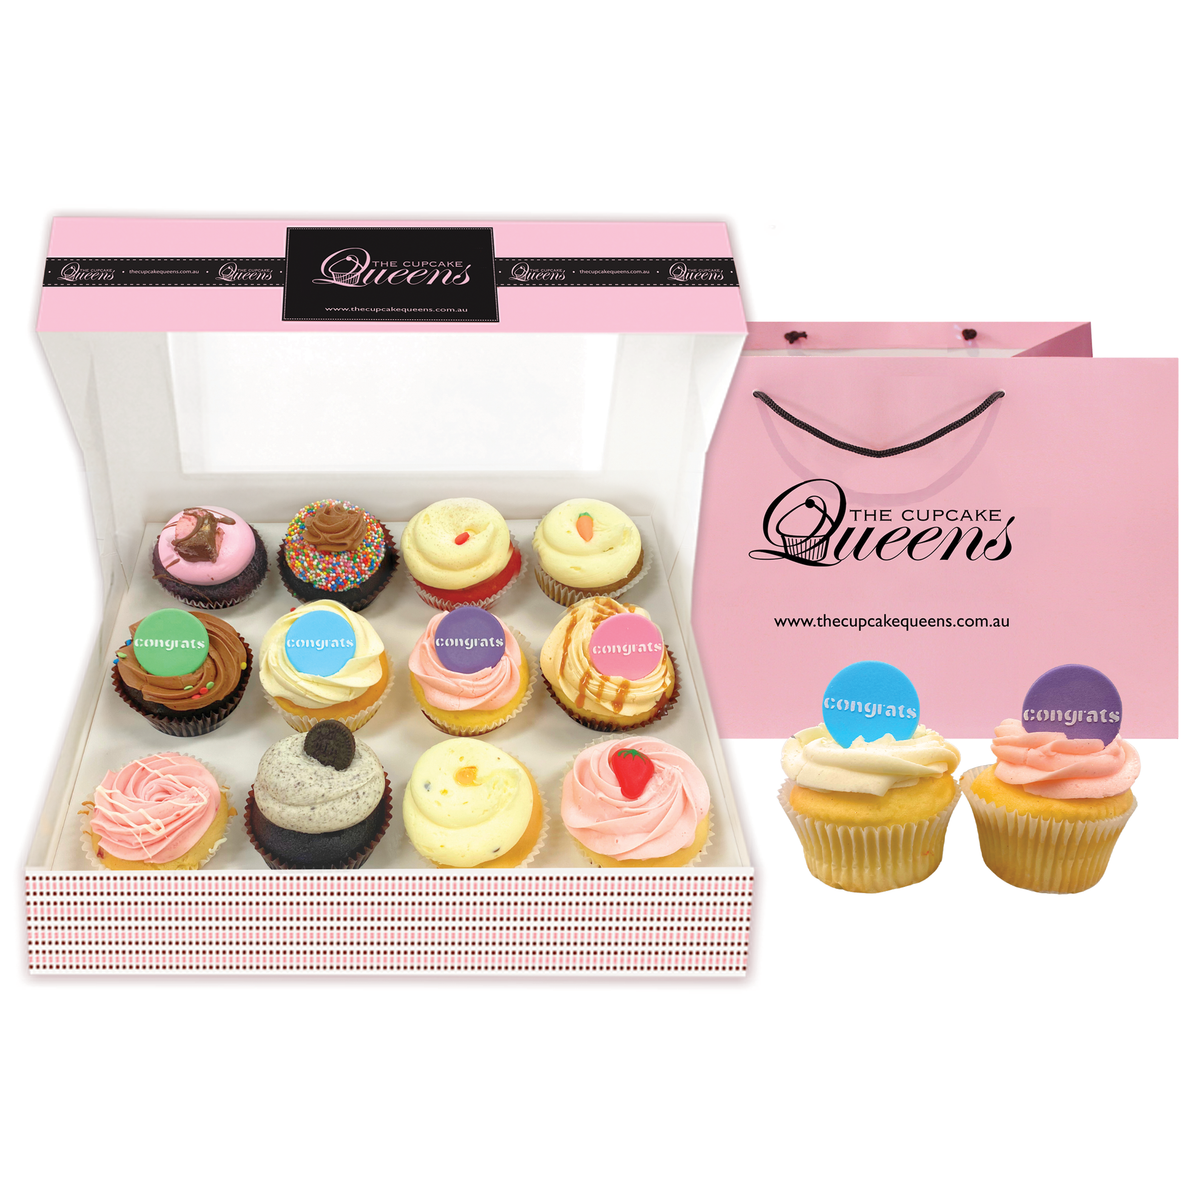 Congratulations Gift Box Cupcakes